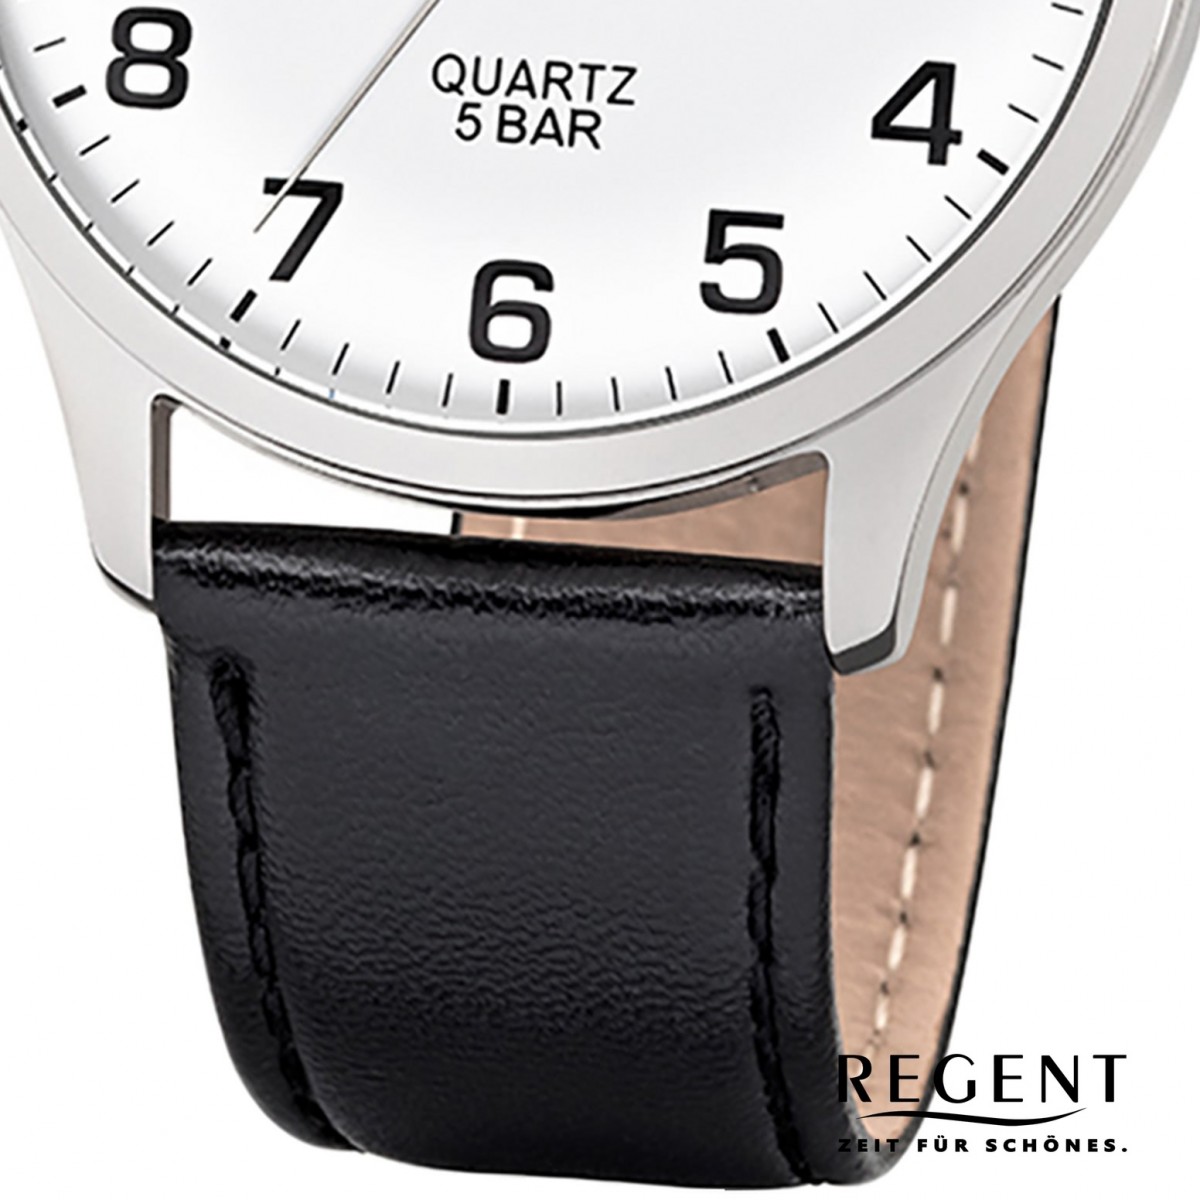 Regent Herren-Armbanduhr F-1241 Quarz-Uhr UR1113405 schwarz Leder-Armband